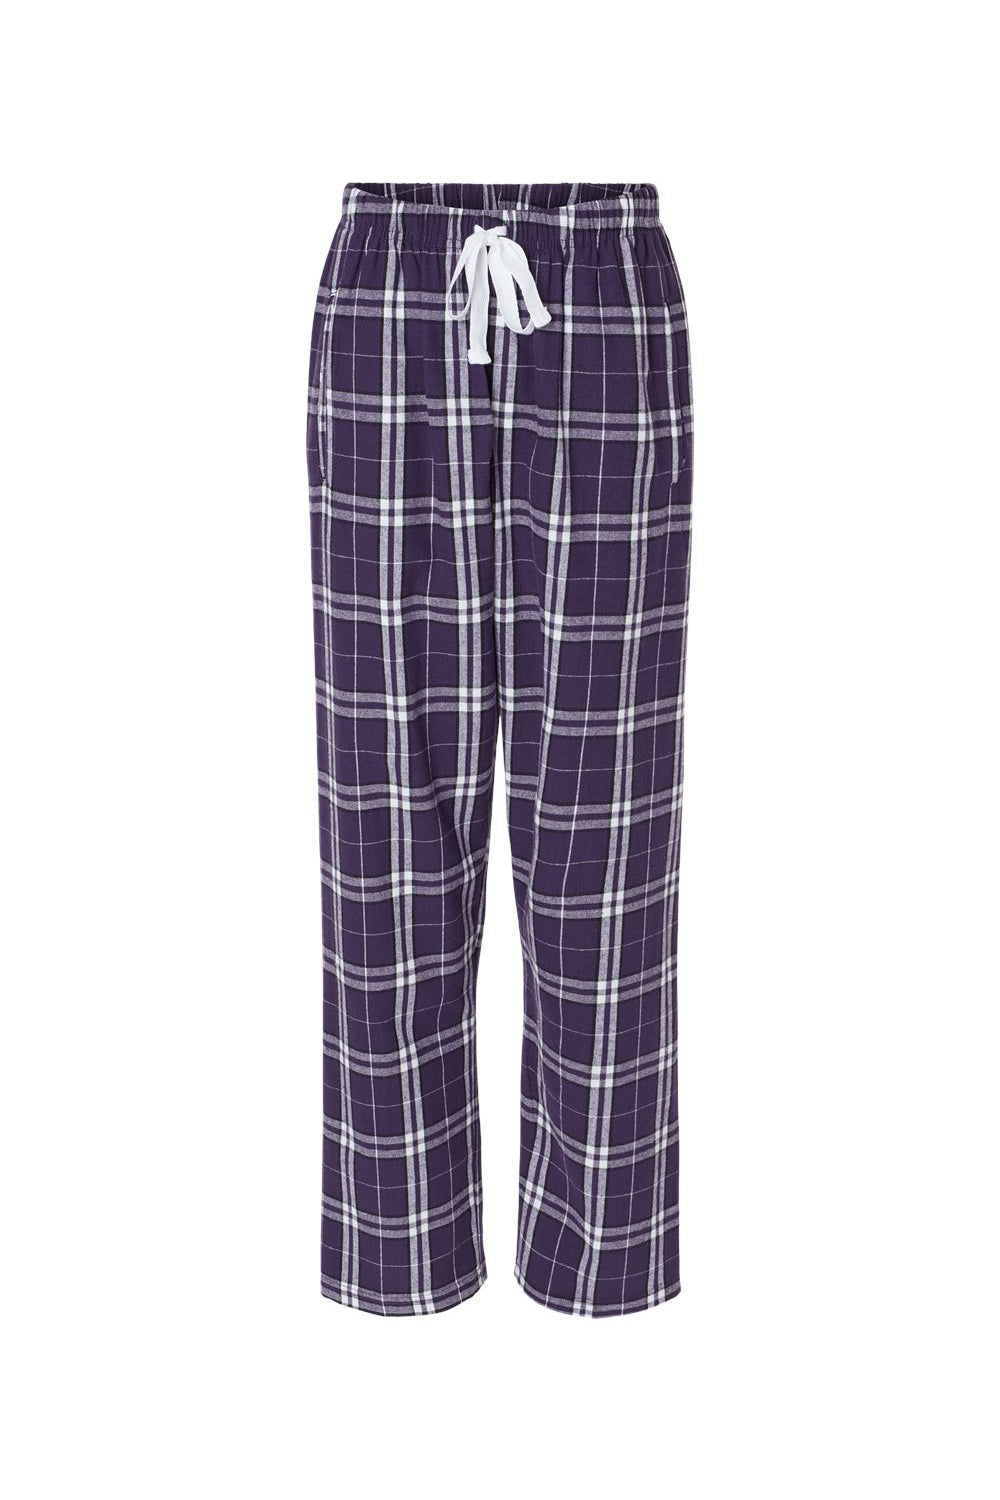 Boxercraft BW6620 Womens Haley Flannel Pants Purple/White Flat Front